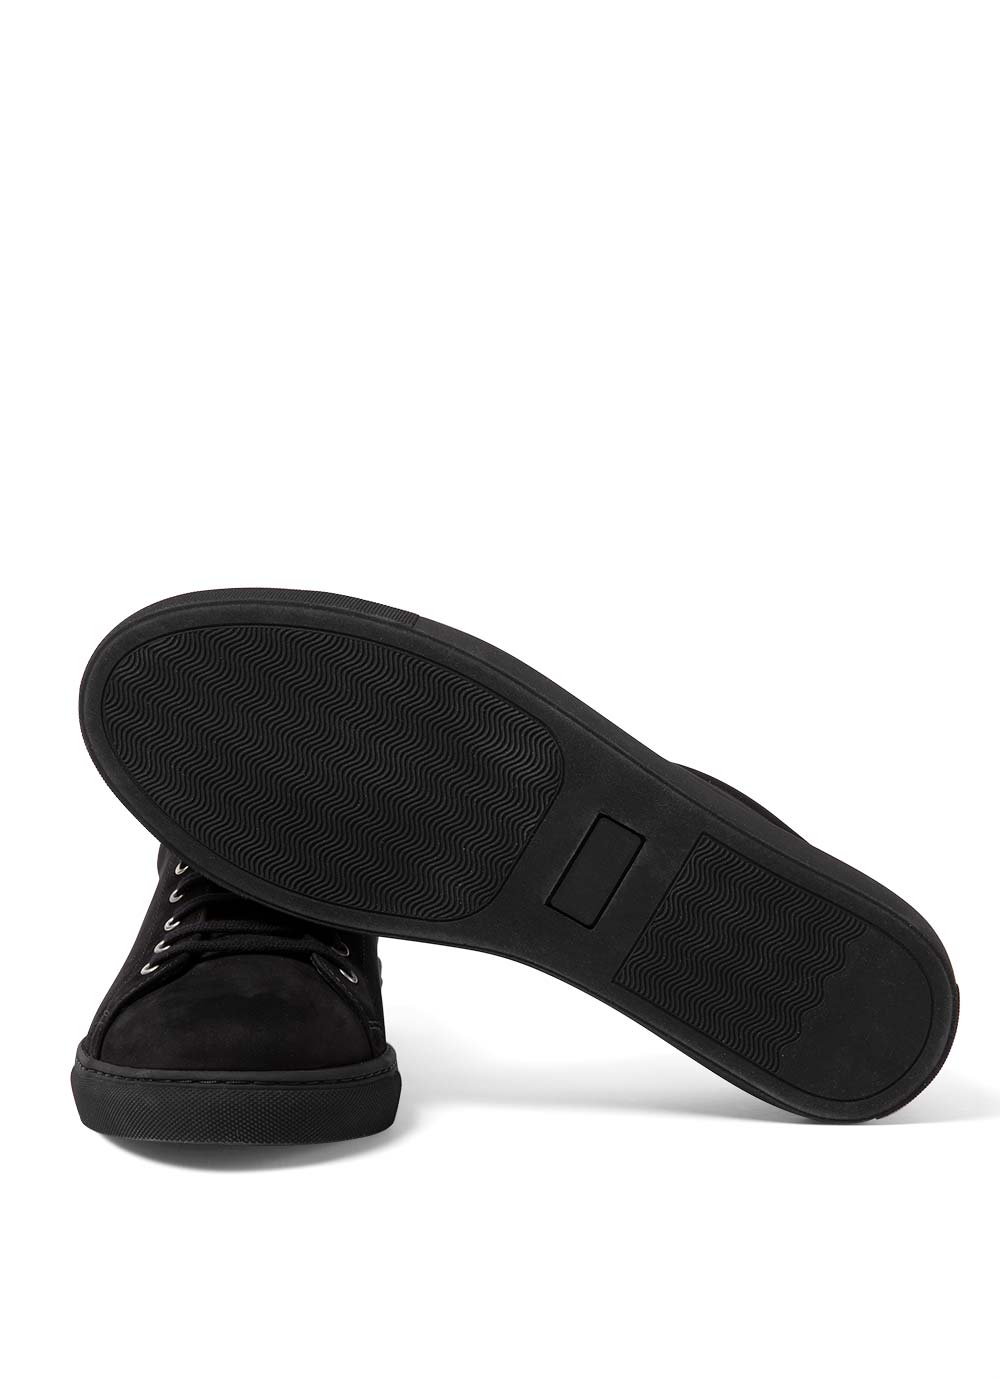 Men's Suede Nubuck Tennis Shoes in Black